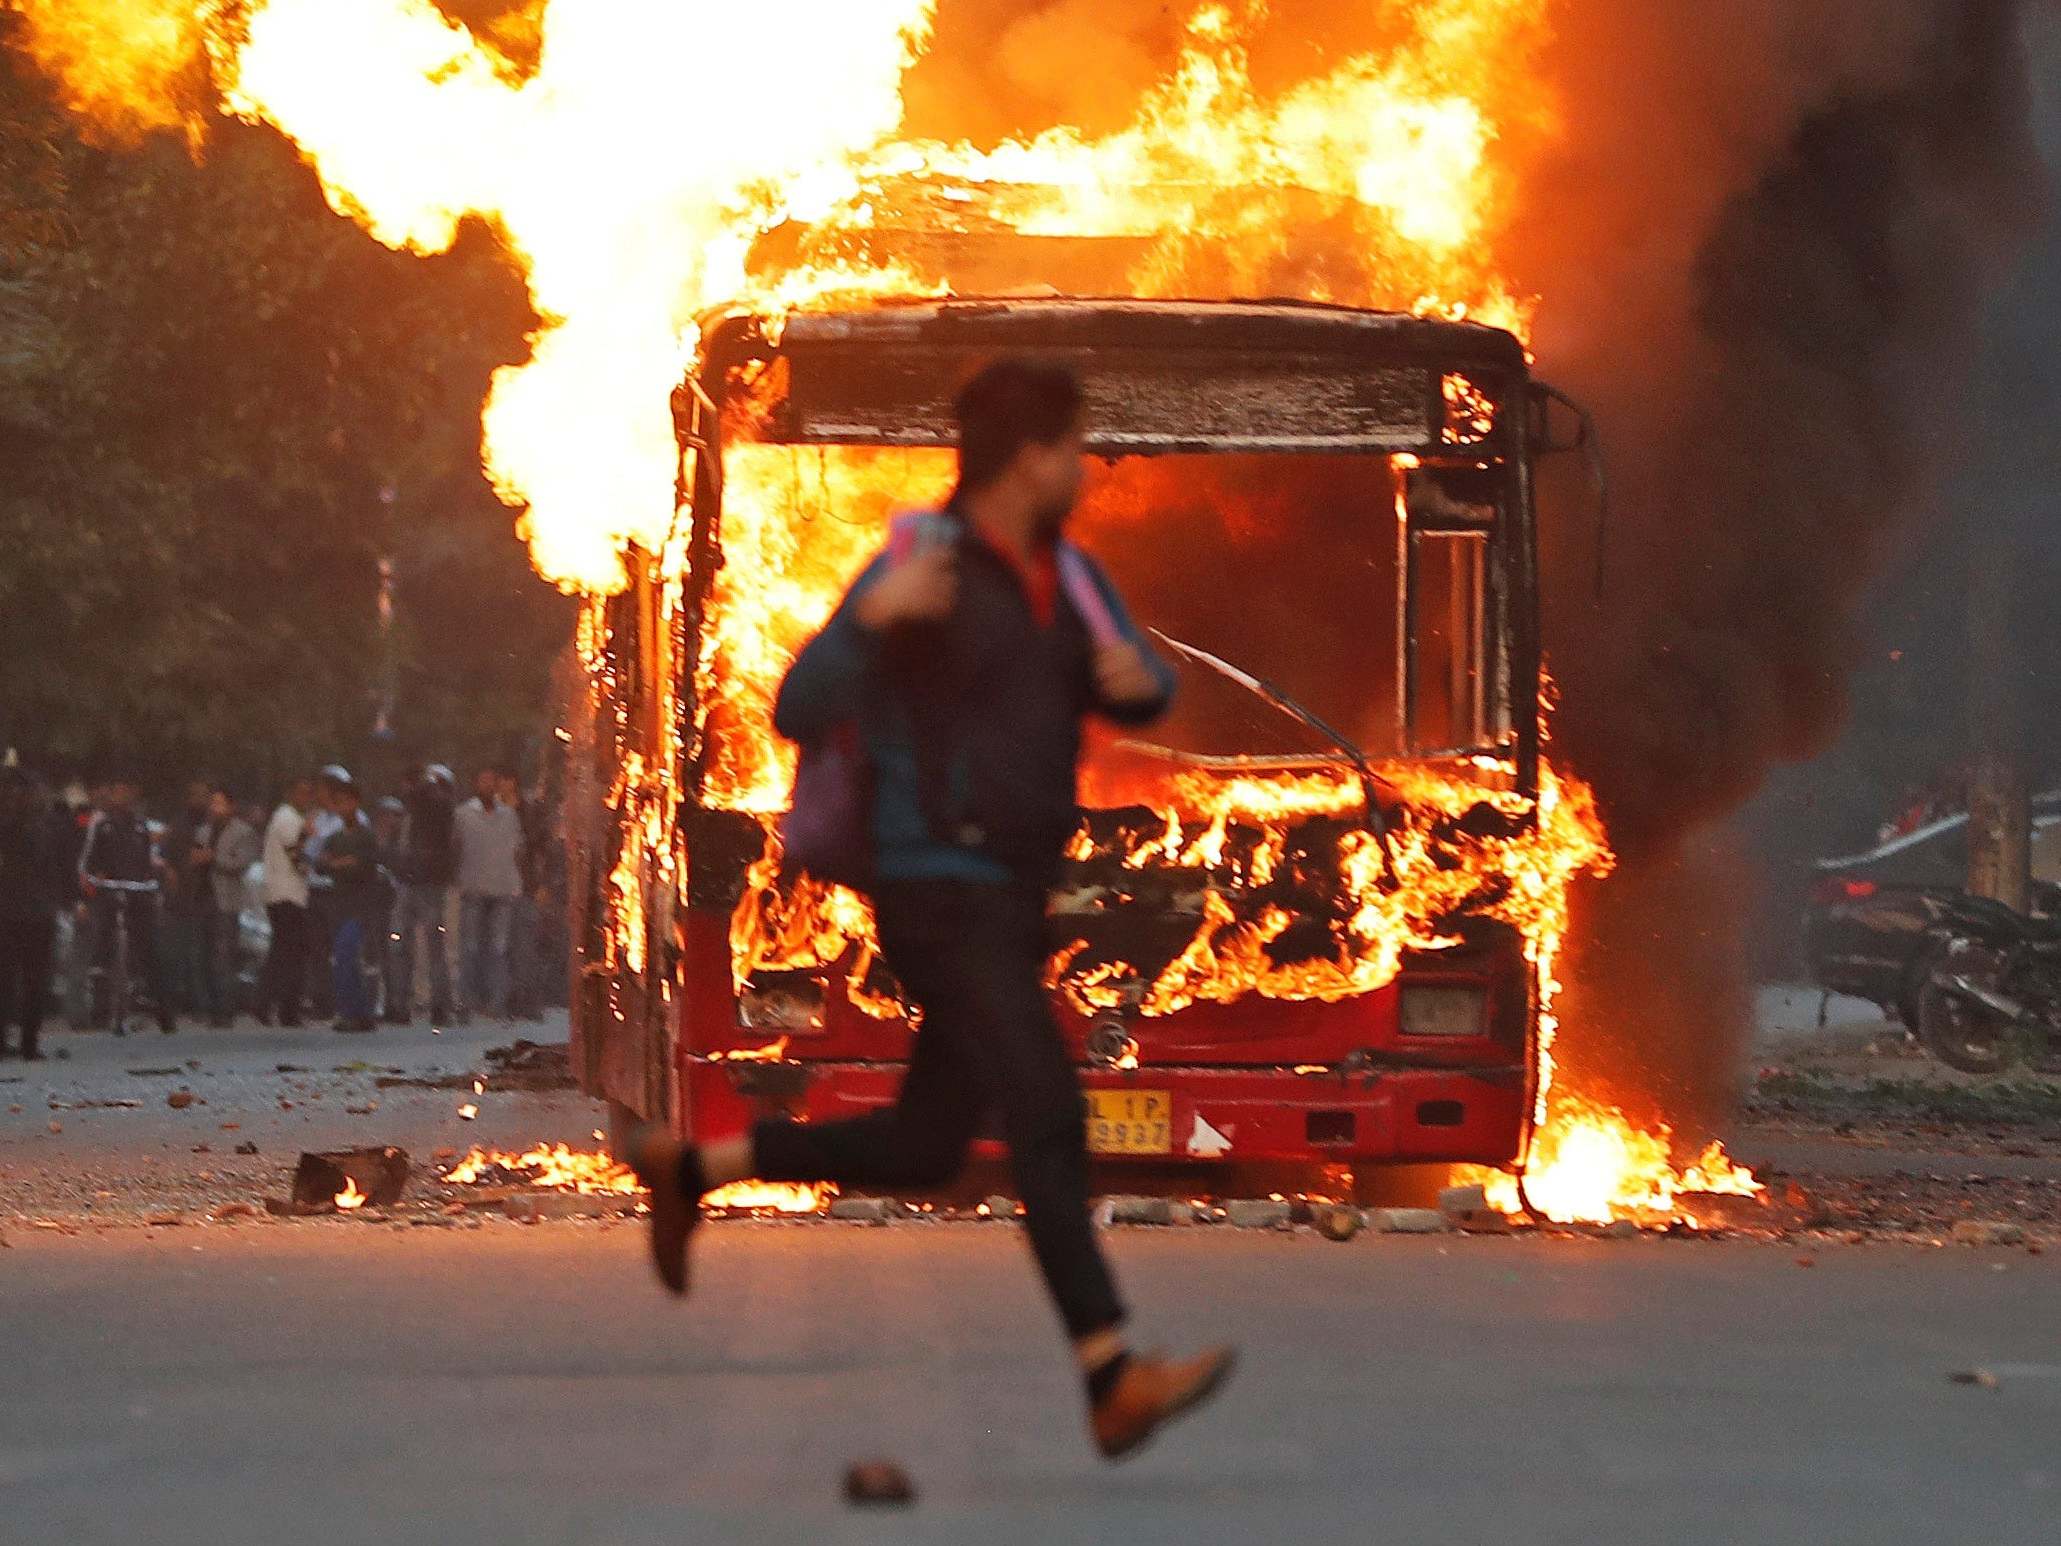 A man runs past a burning bus in New Delhi, India